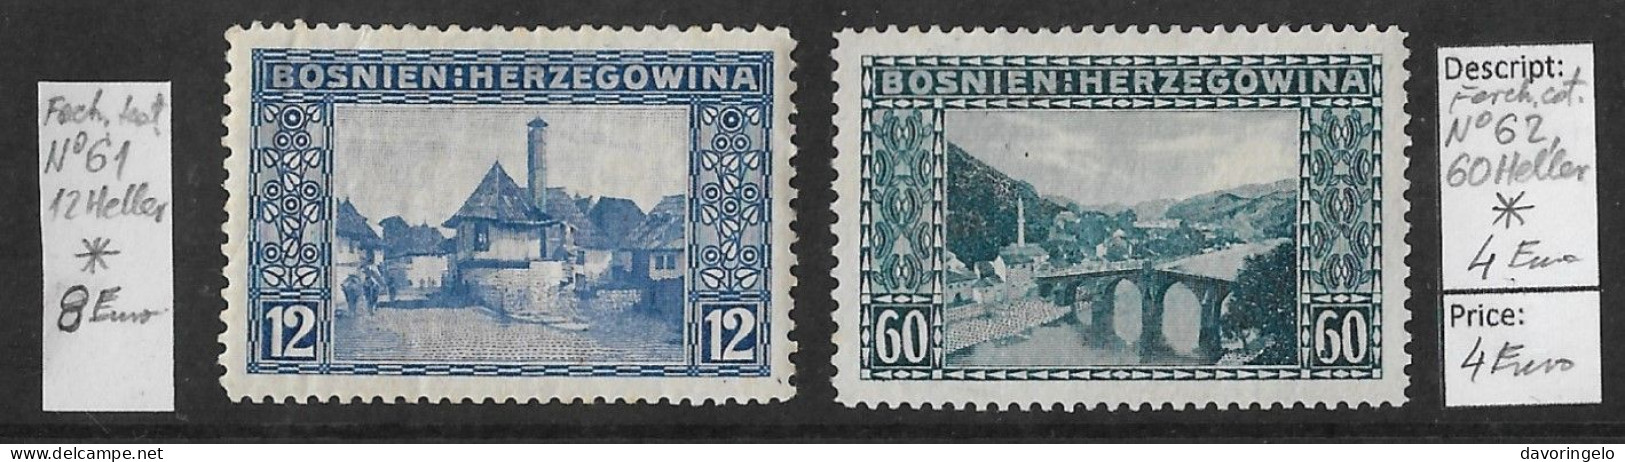 Bosnia-Herzegovina/Austria-Hungary, 1912 Year, No 61 & 62, Hinged (*) - Bosnia And Herzegovina